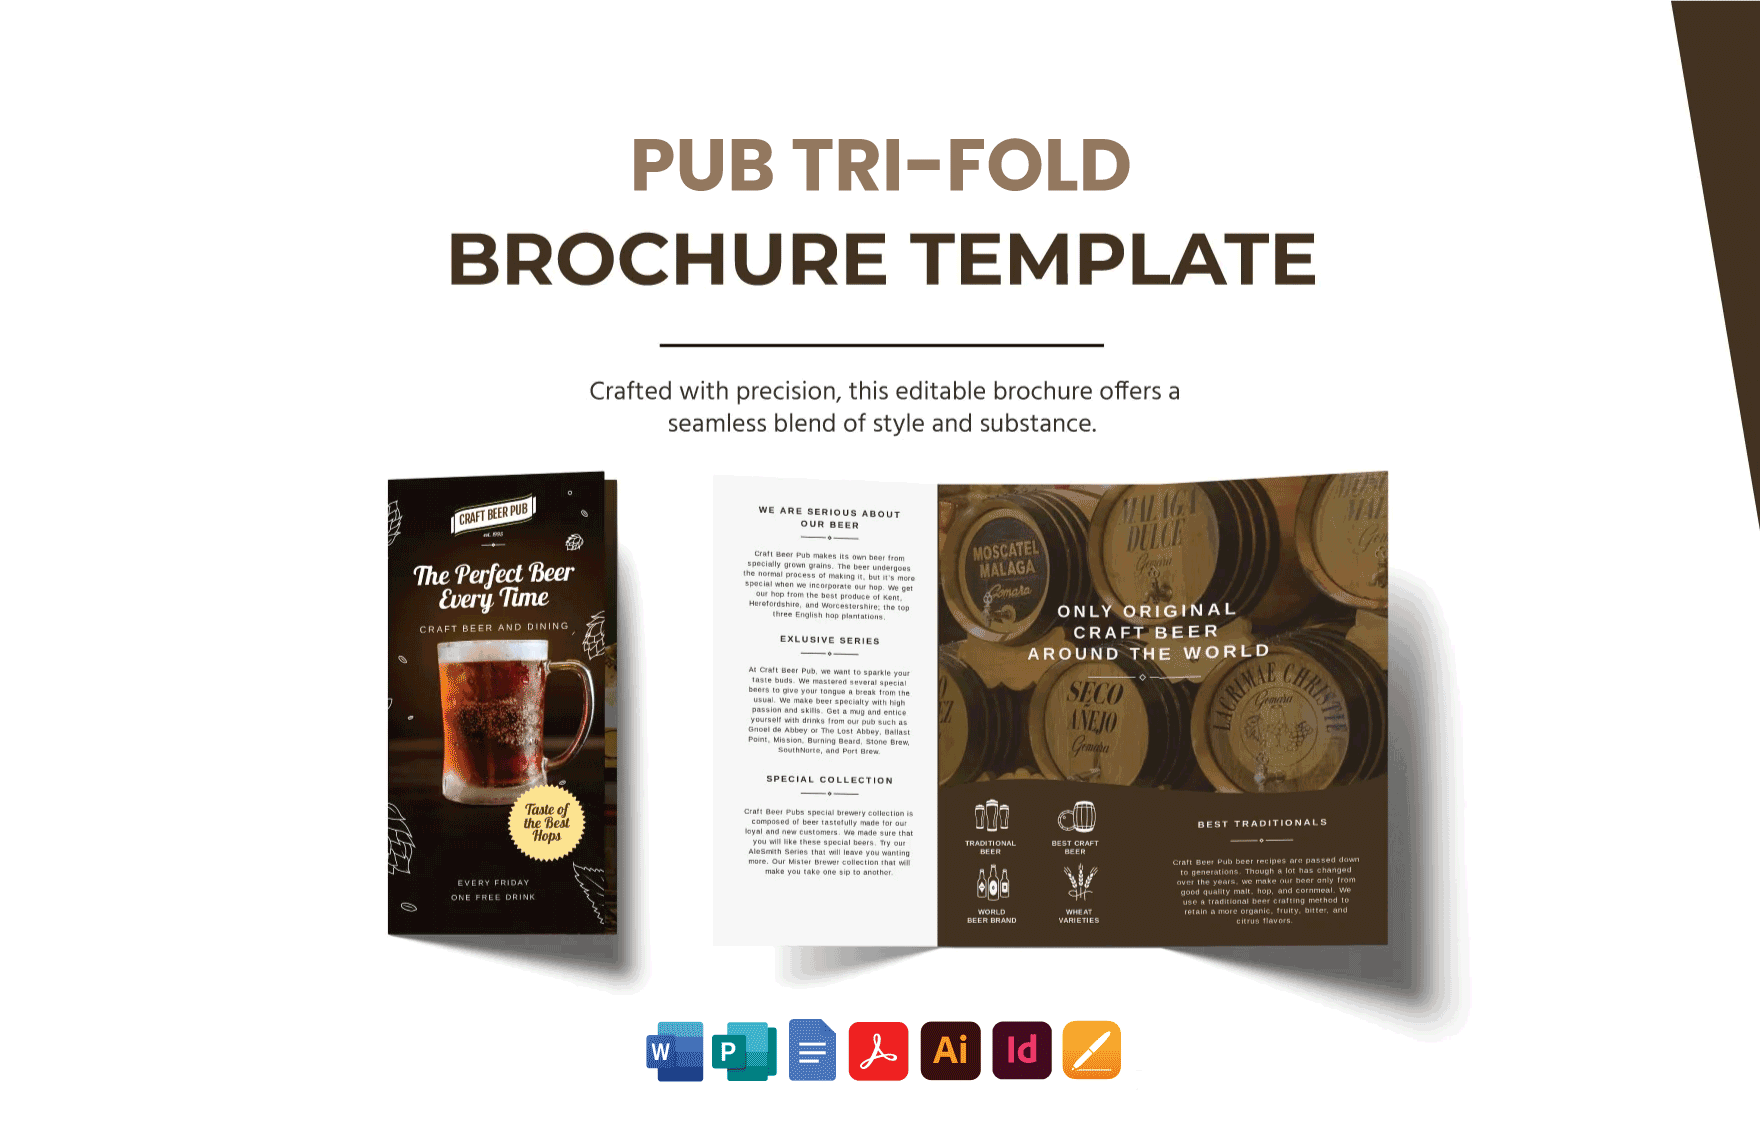 Pub Tri-Fold Brochure Template